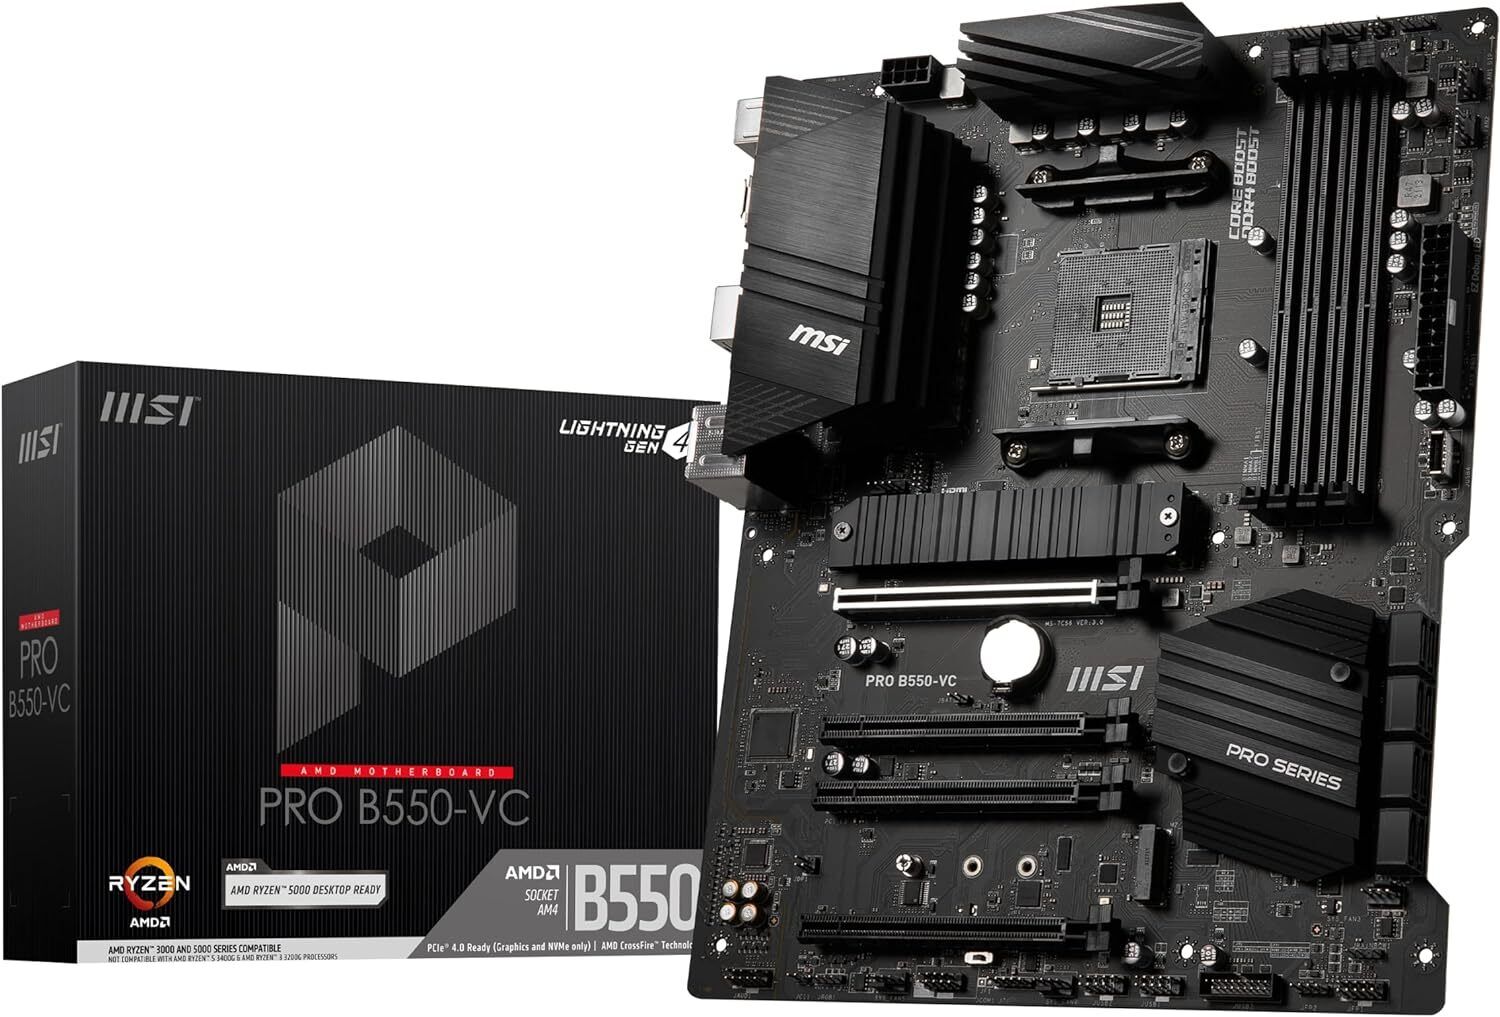 MSI PRO B550-VC ProSeries AMD AM4 Ryzen 5000 Series DDR4 ATX Motherboard